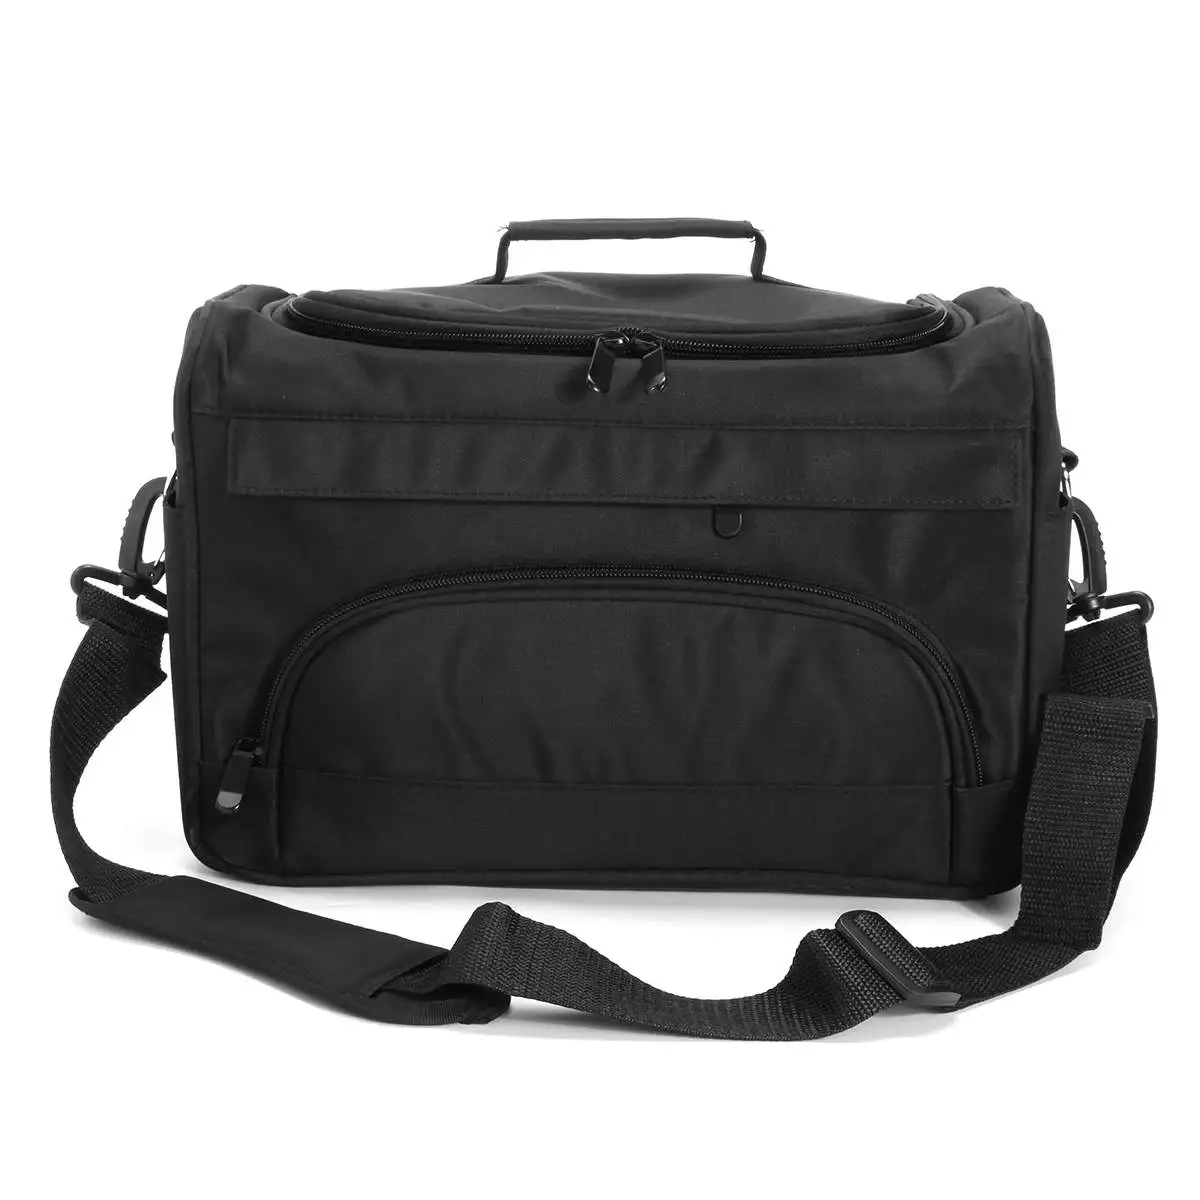 Grande Capacidade Multilayer Clapboard Bag, Professional Organizer Case, armazenamento Malas, alta qualidade